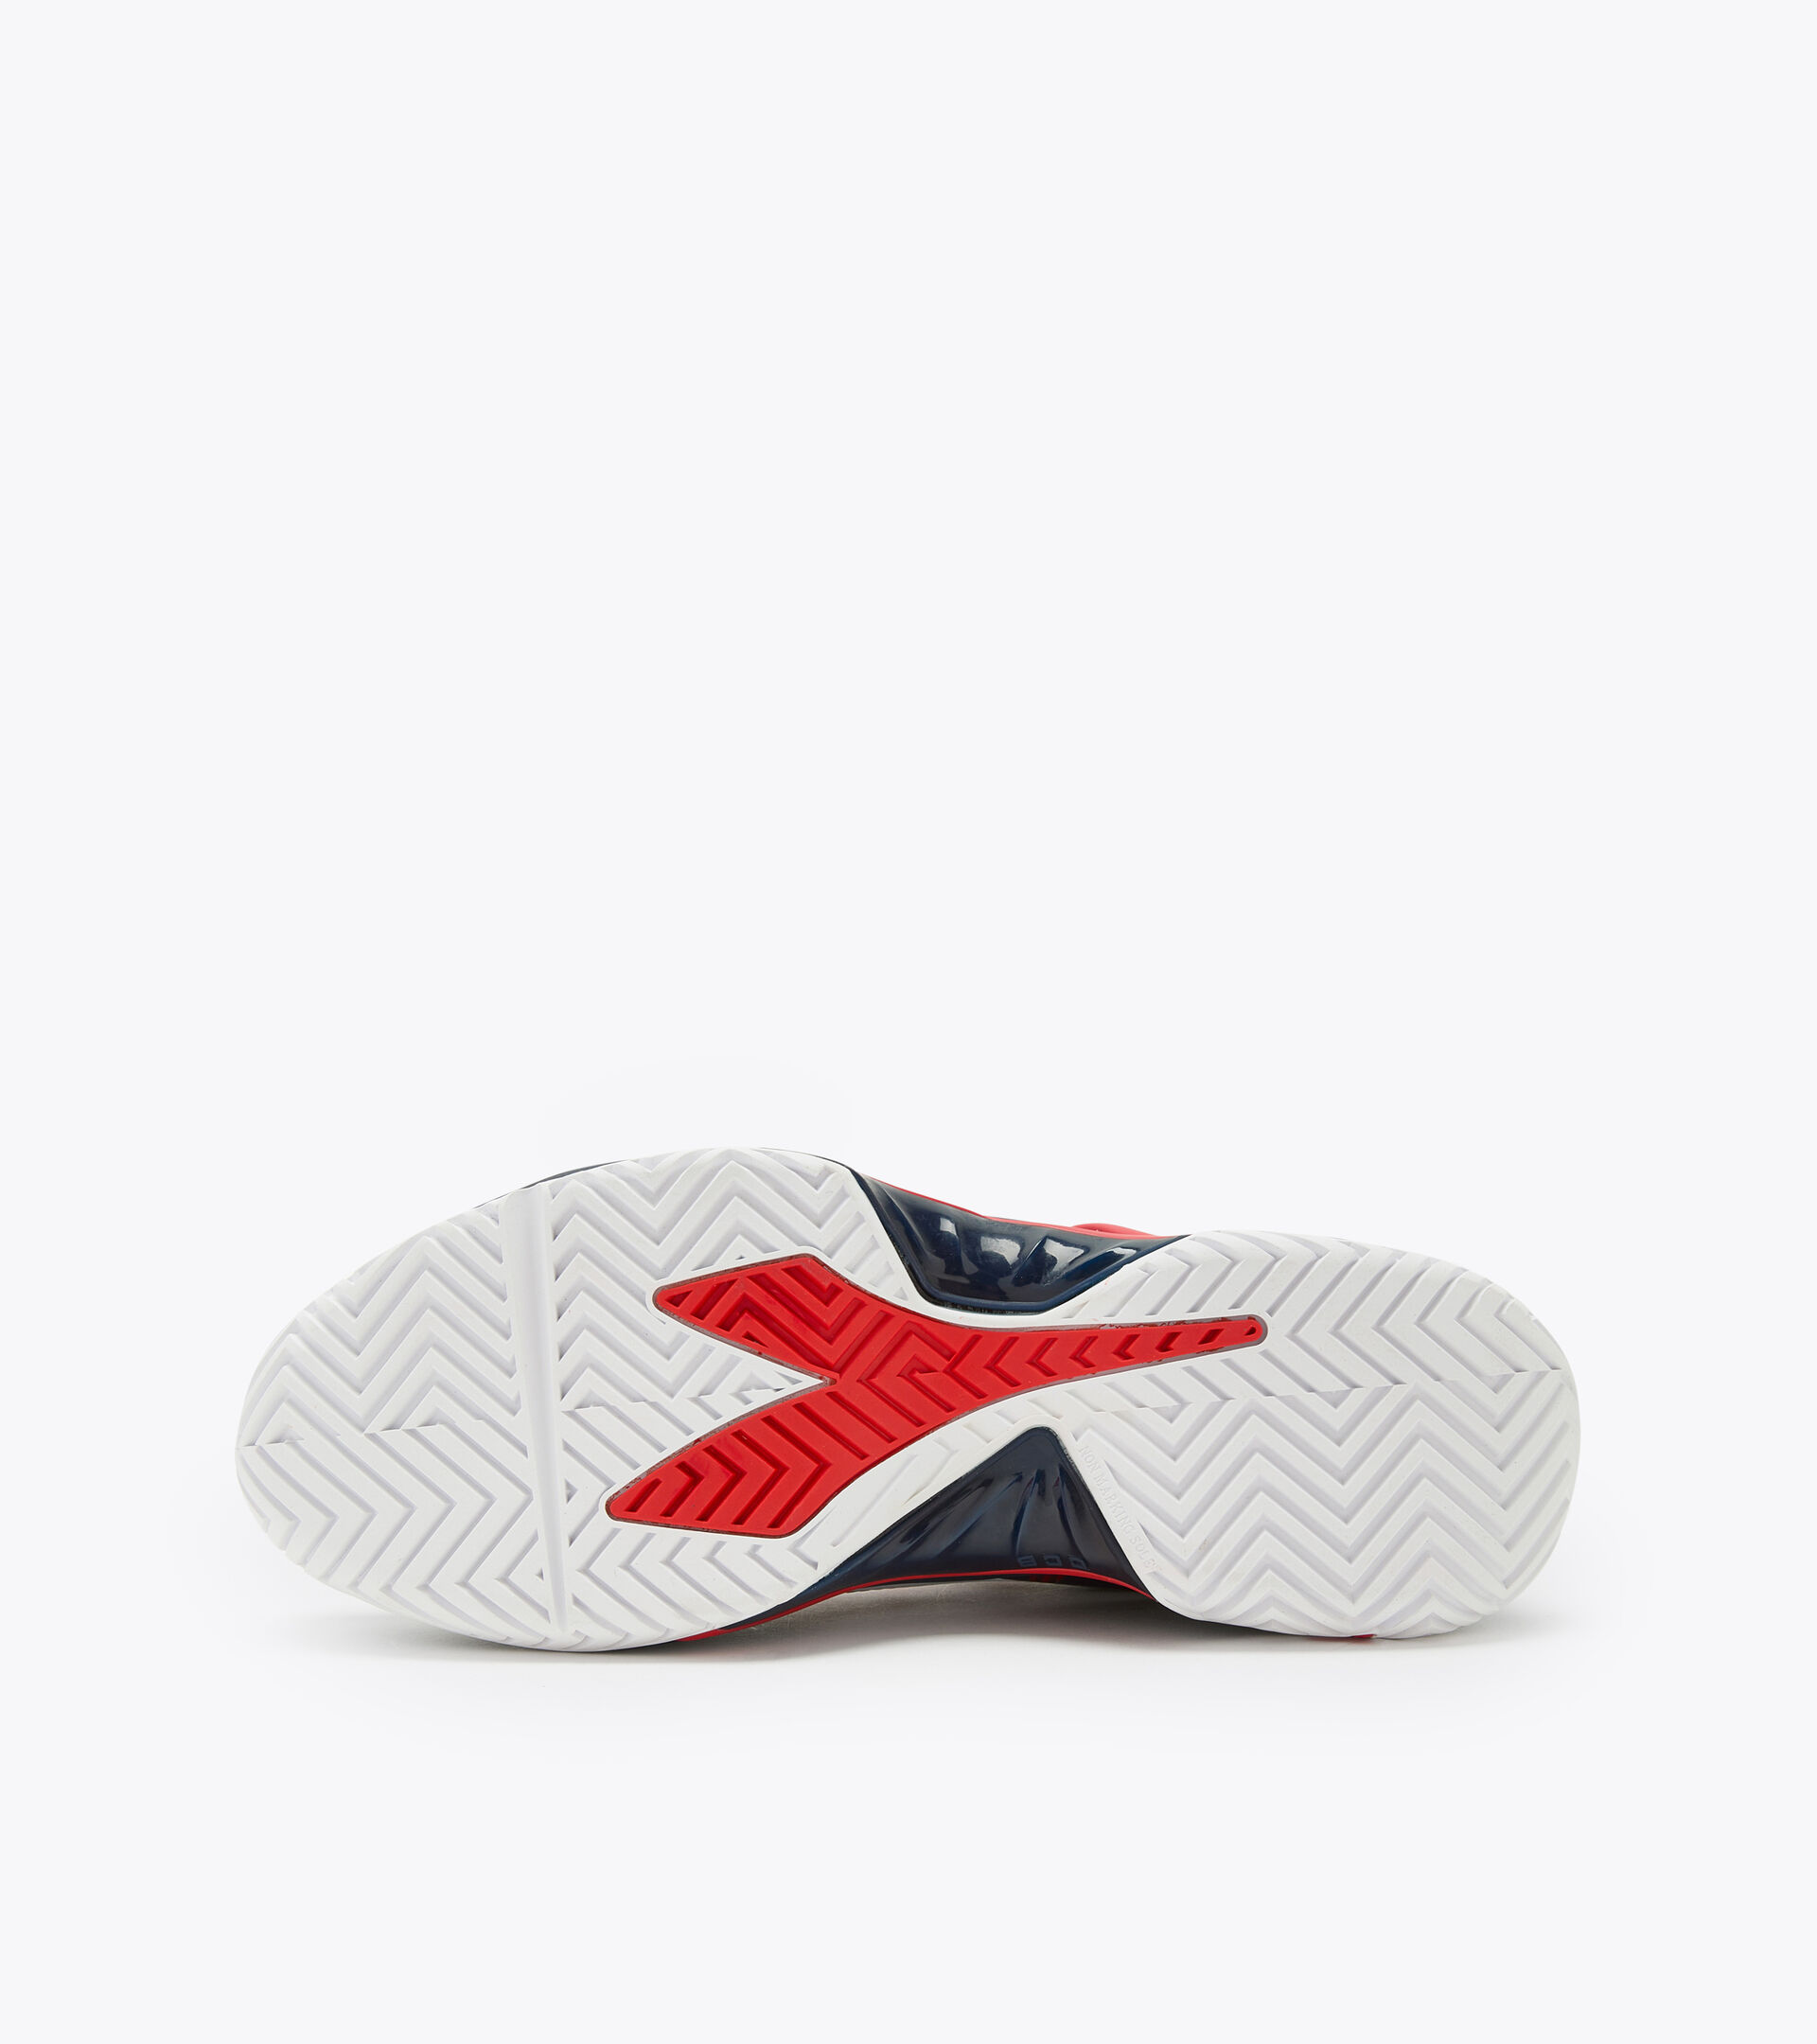 Tennis shoes for hard surfaces or clay - Men B.ICON 2 AG BLUE CORSAIR/WHITE/FIERY RED - Diadora